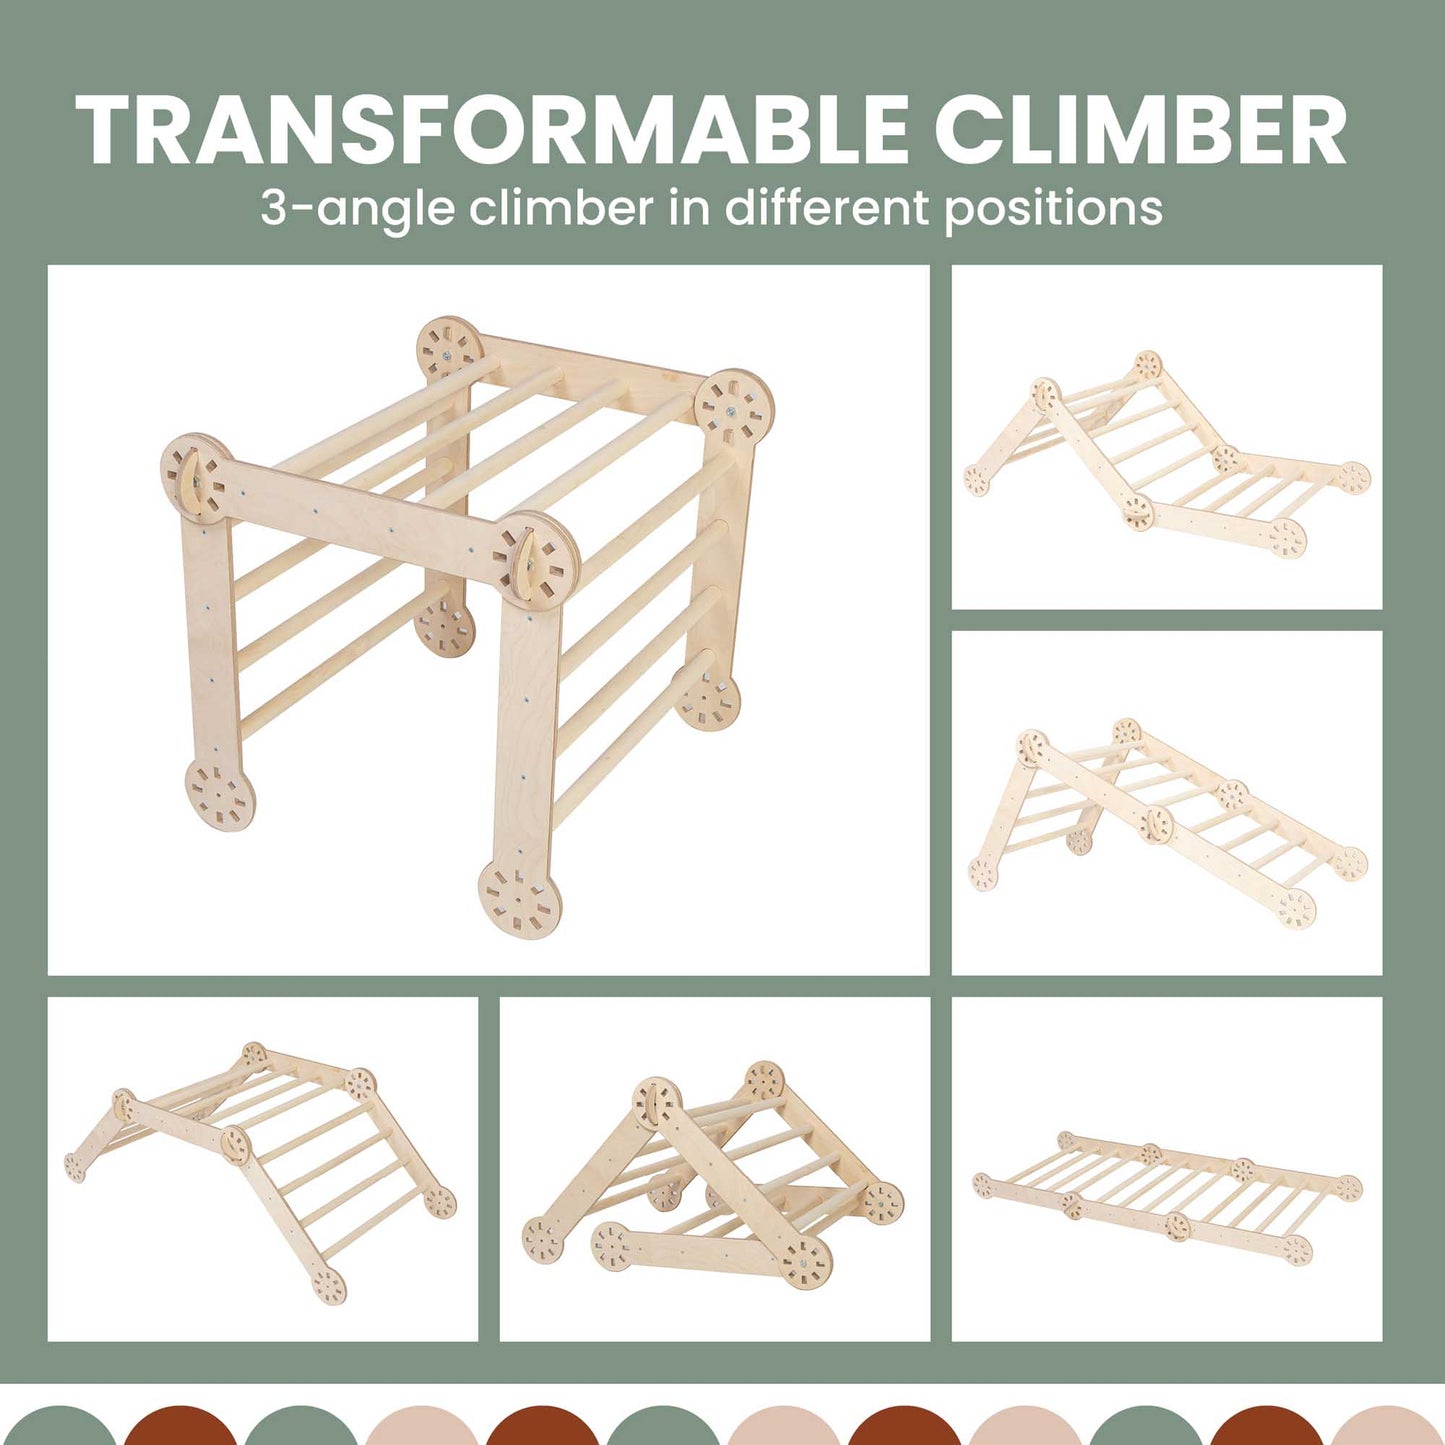 Climbing triangle + Transformable climbing gym + a ramp